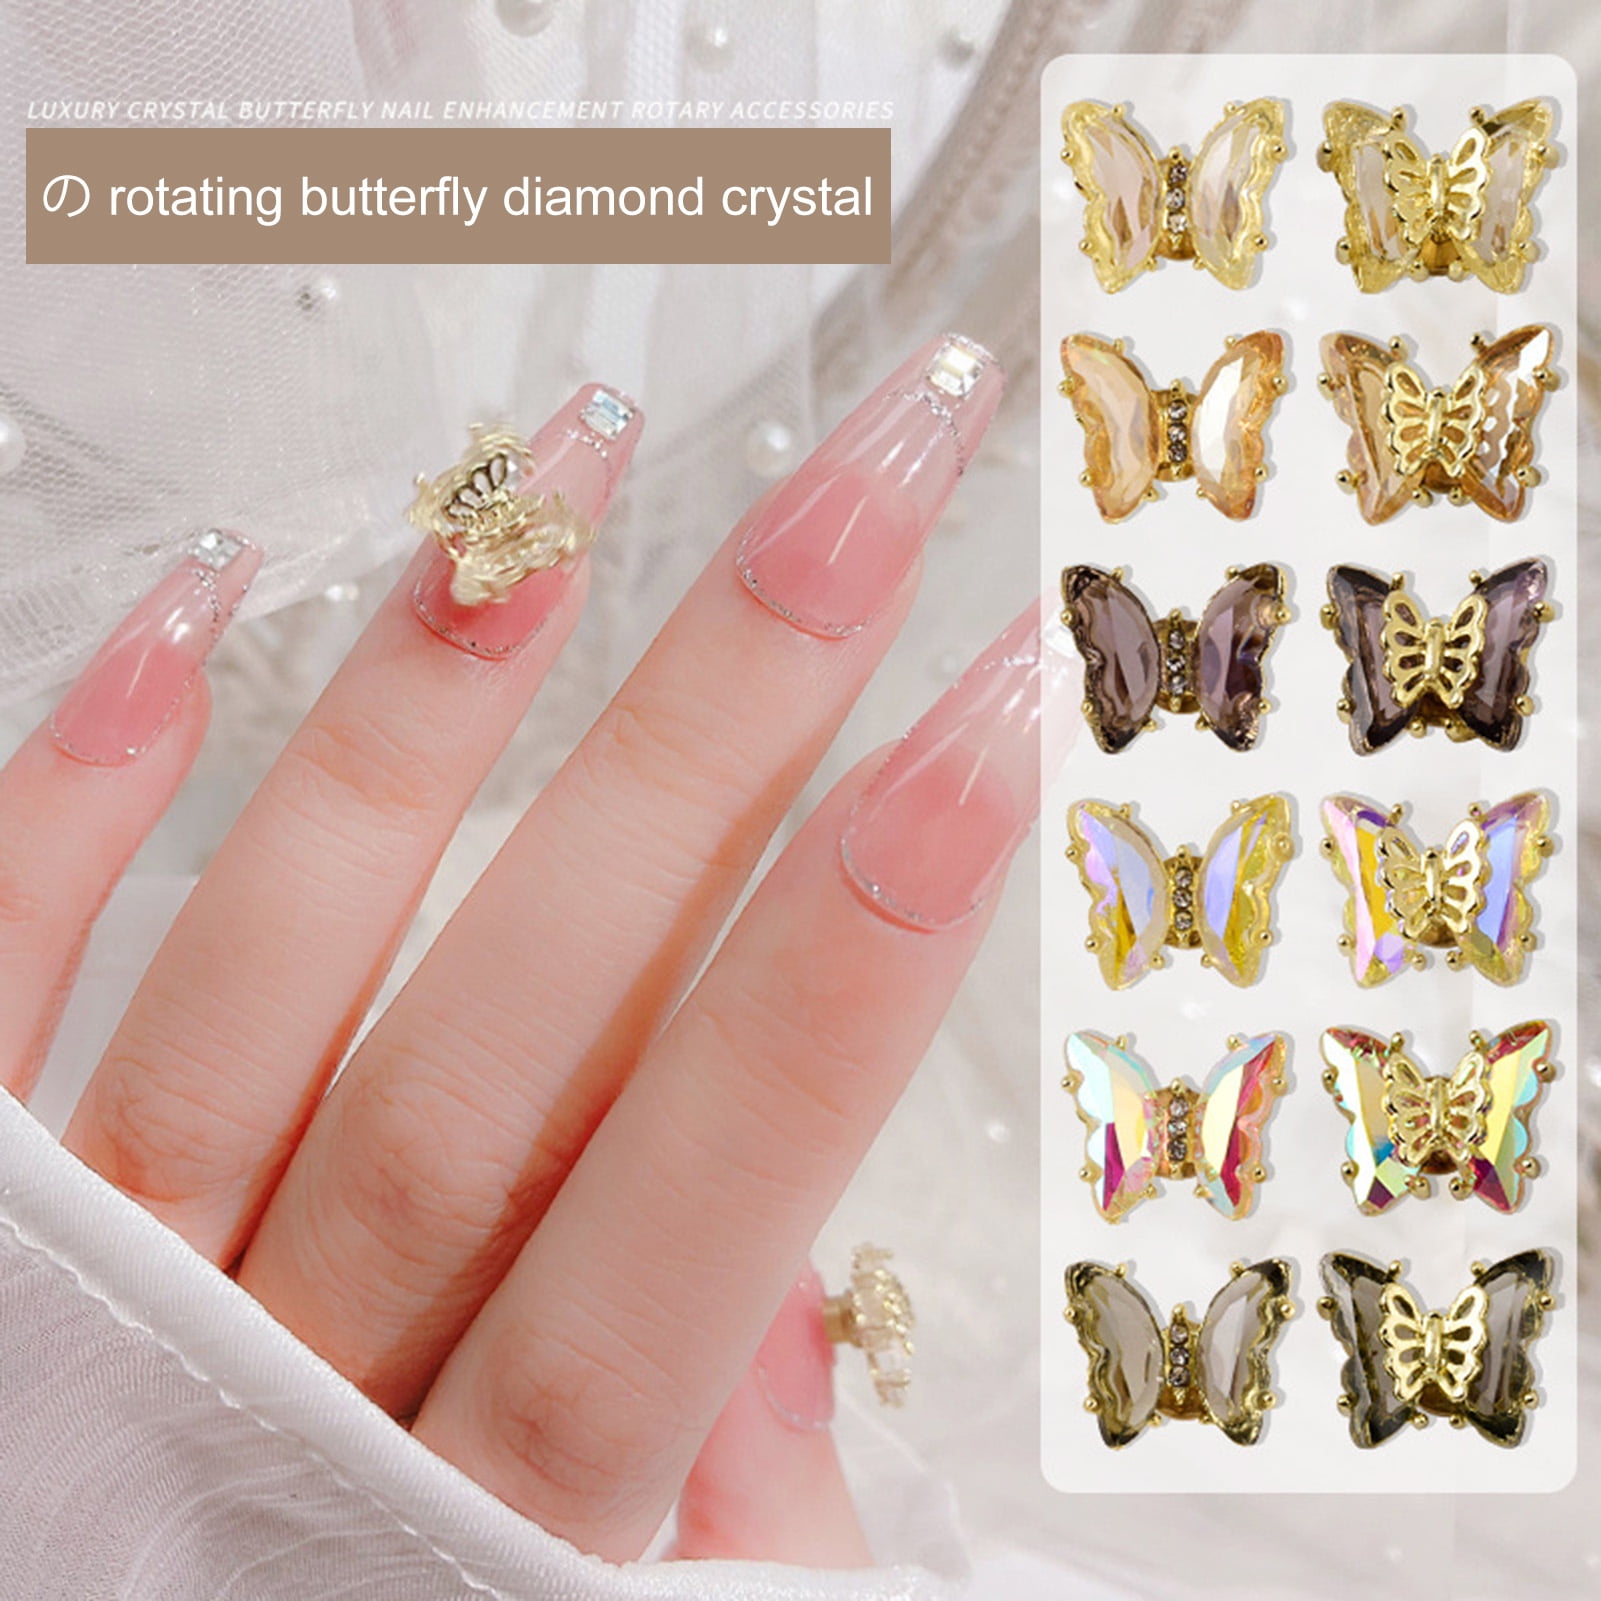 TSV Nail Art Rhinestones, Nail Crystal Gems, Butterfly Nail Sequins,  Flatback Glass Charms Rhinestones, Foil Nail Chip Glitter, Colorful Nail